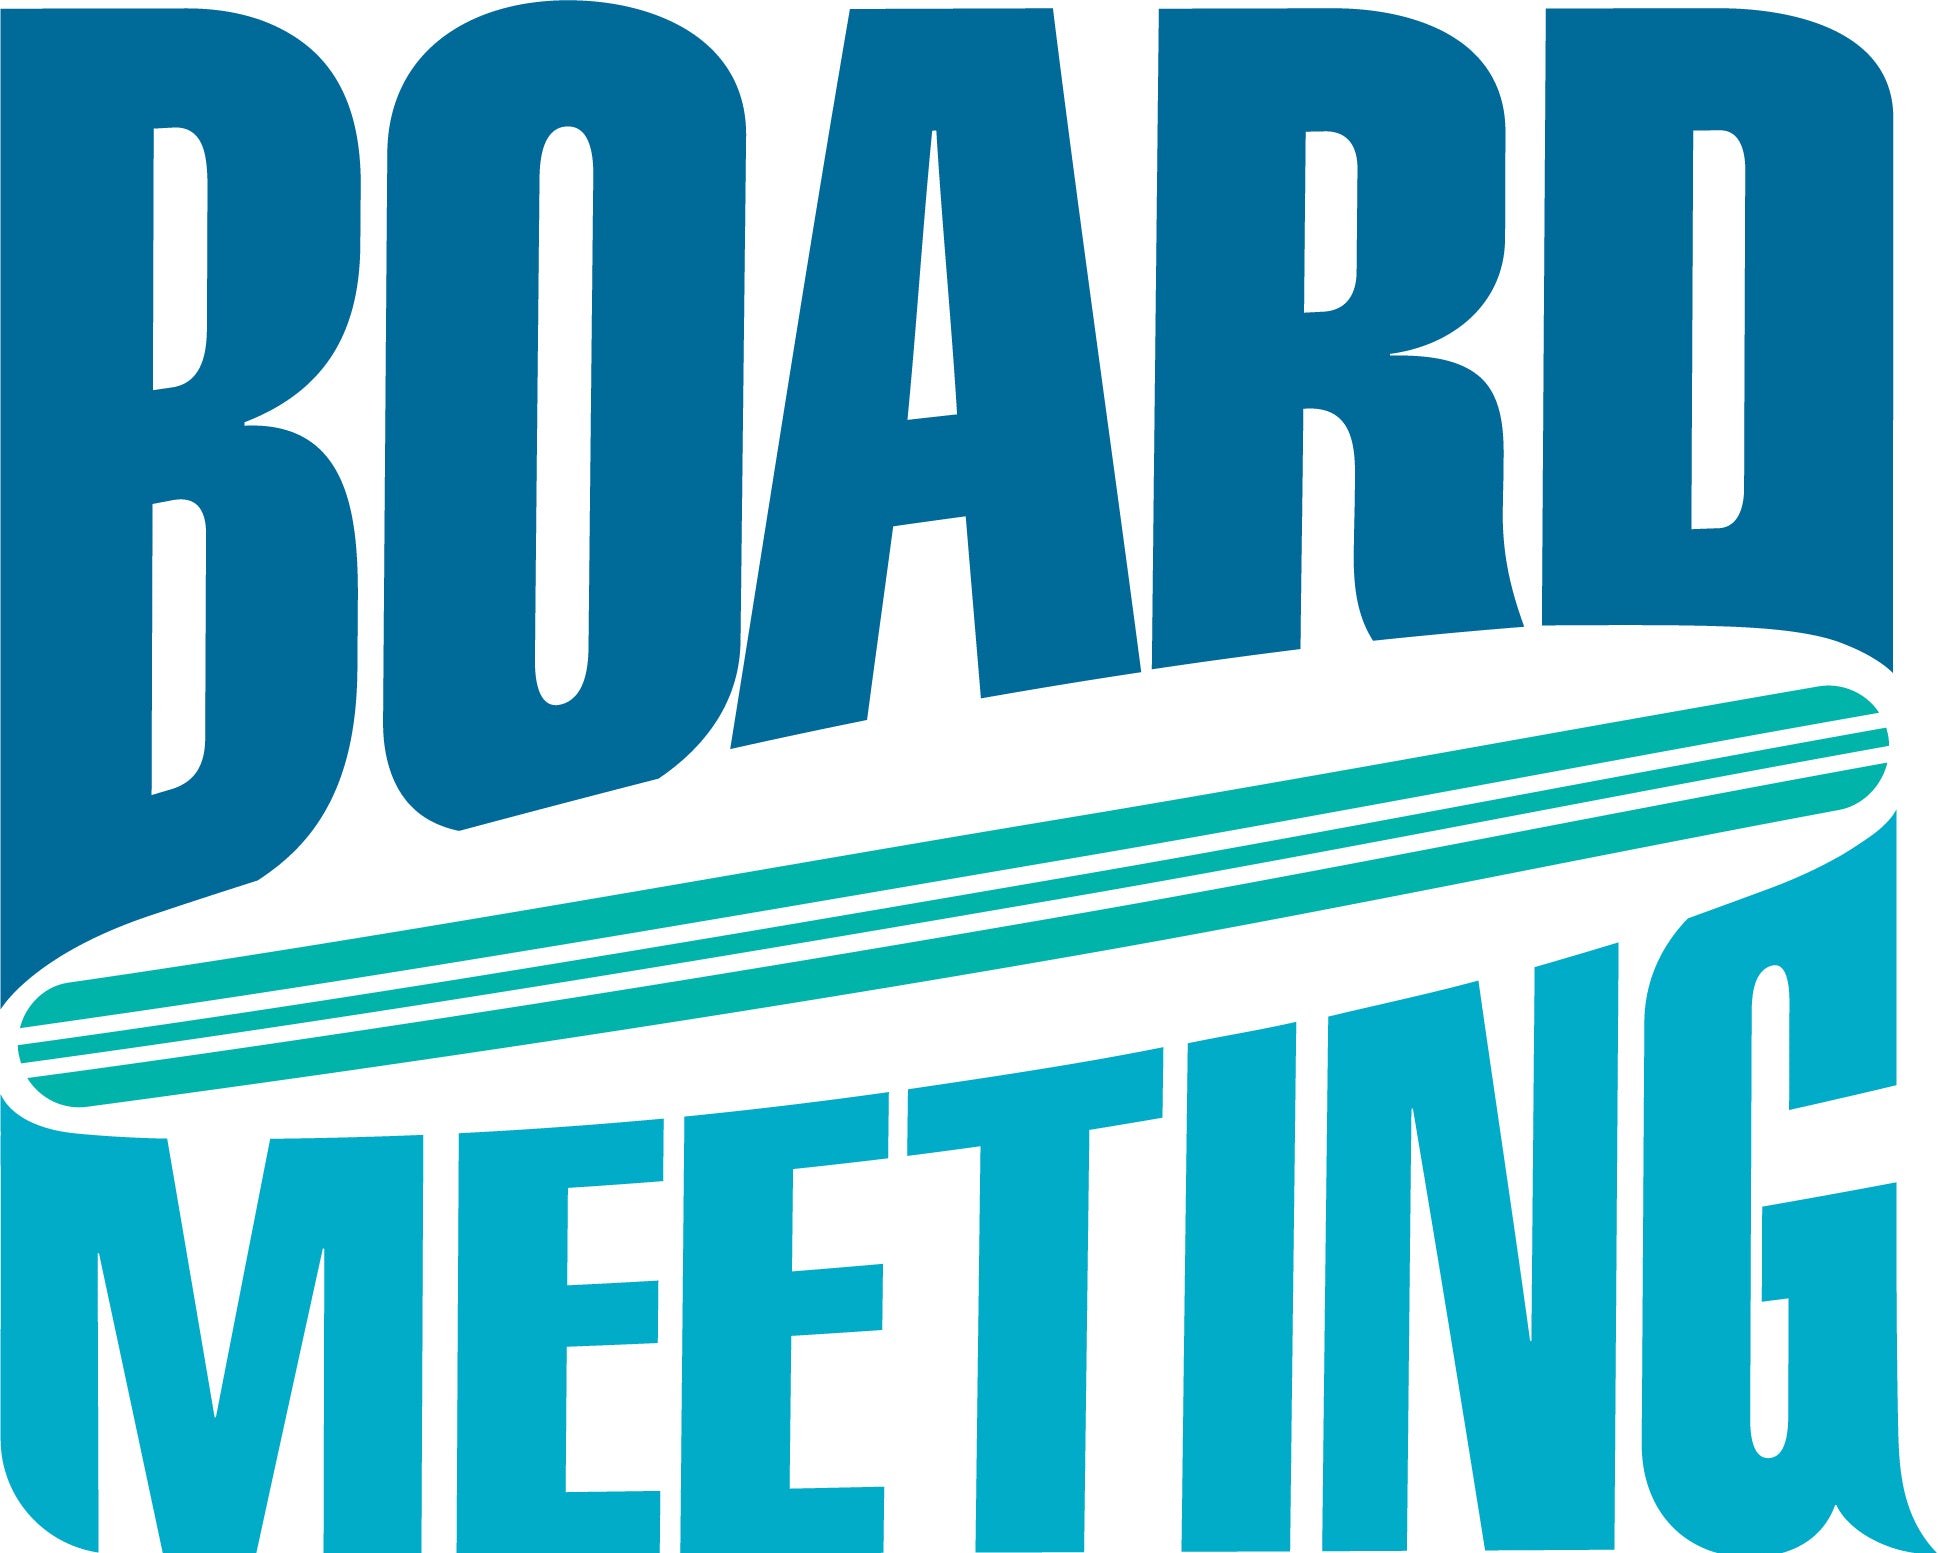 Board Meeting shirt sup surfing surfer foilboard